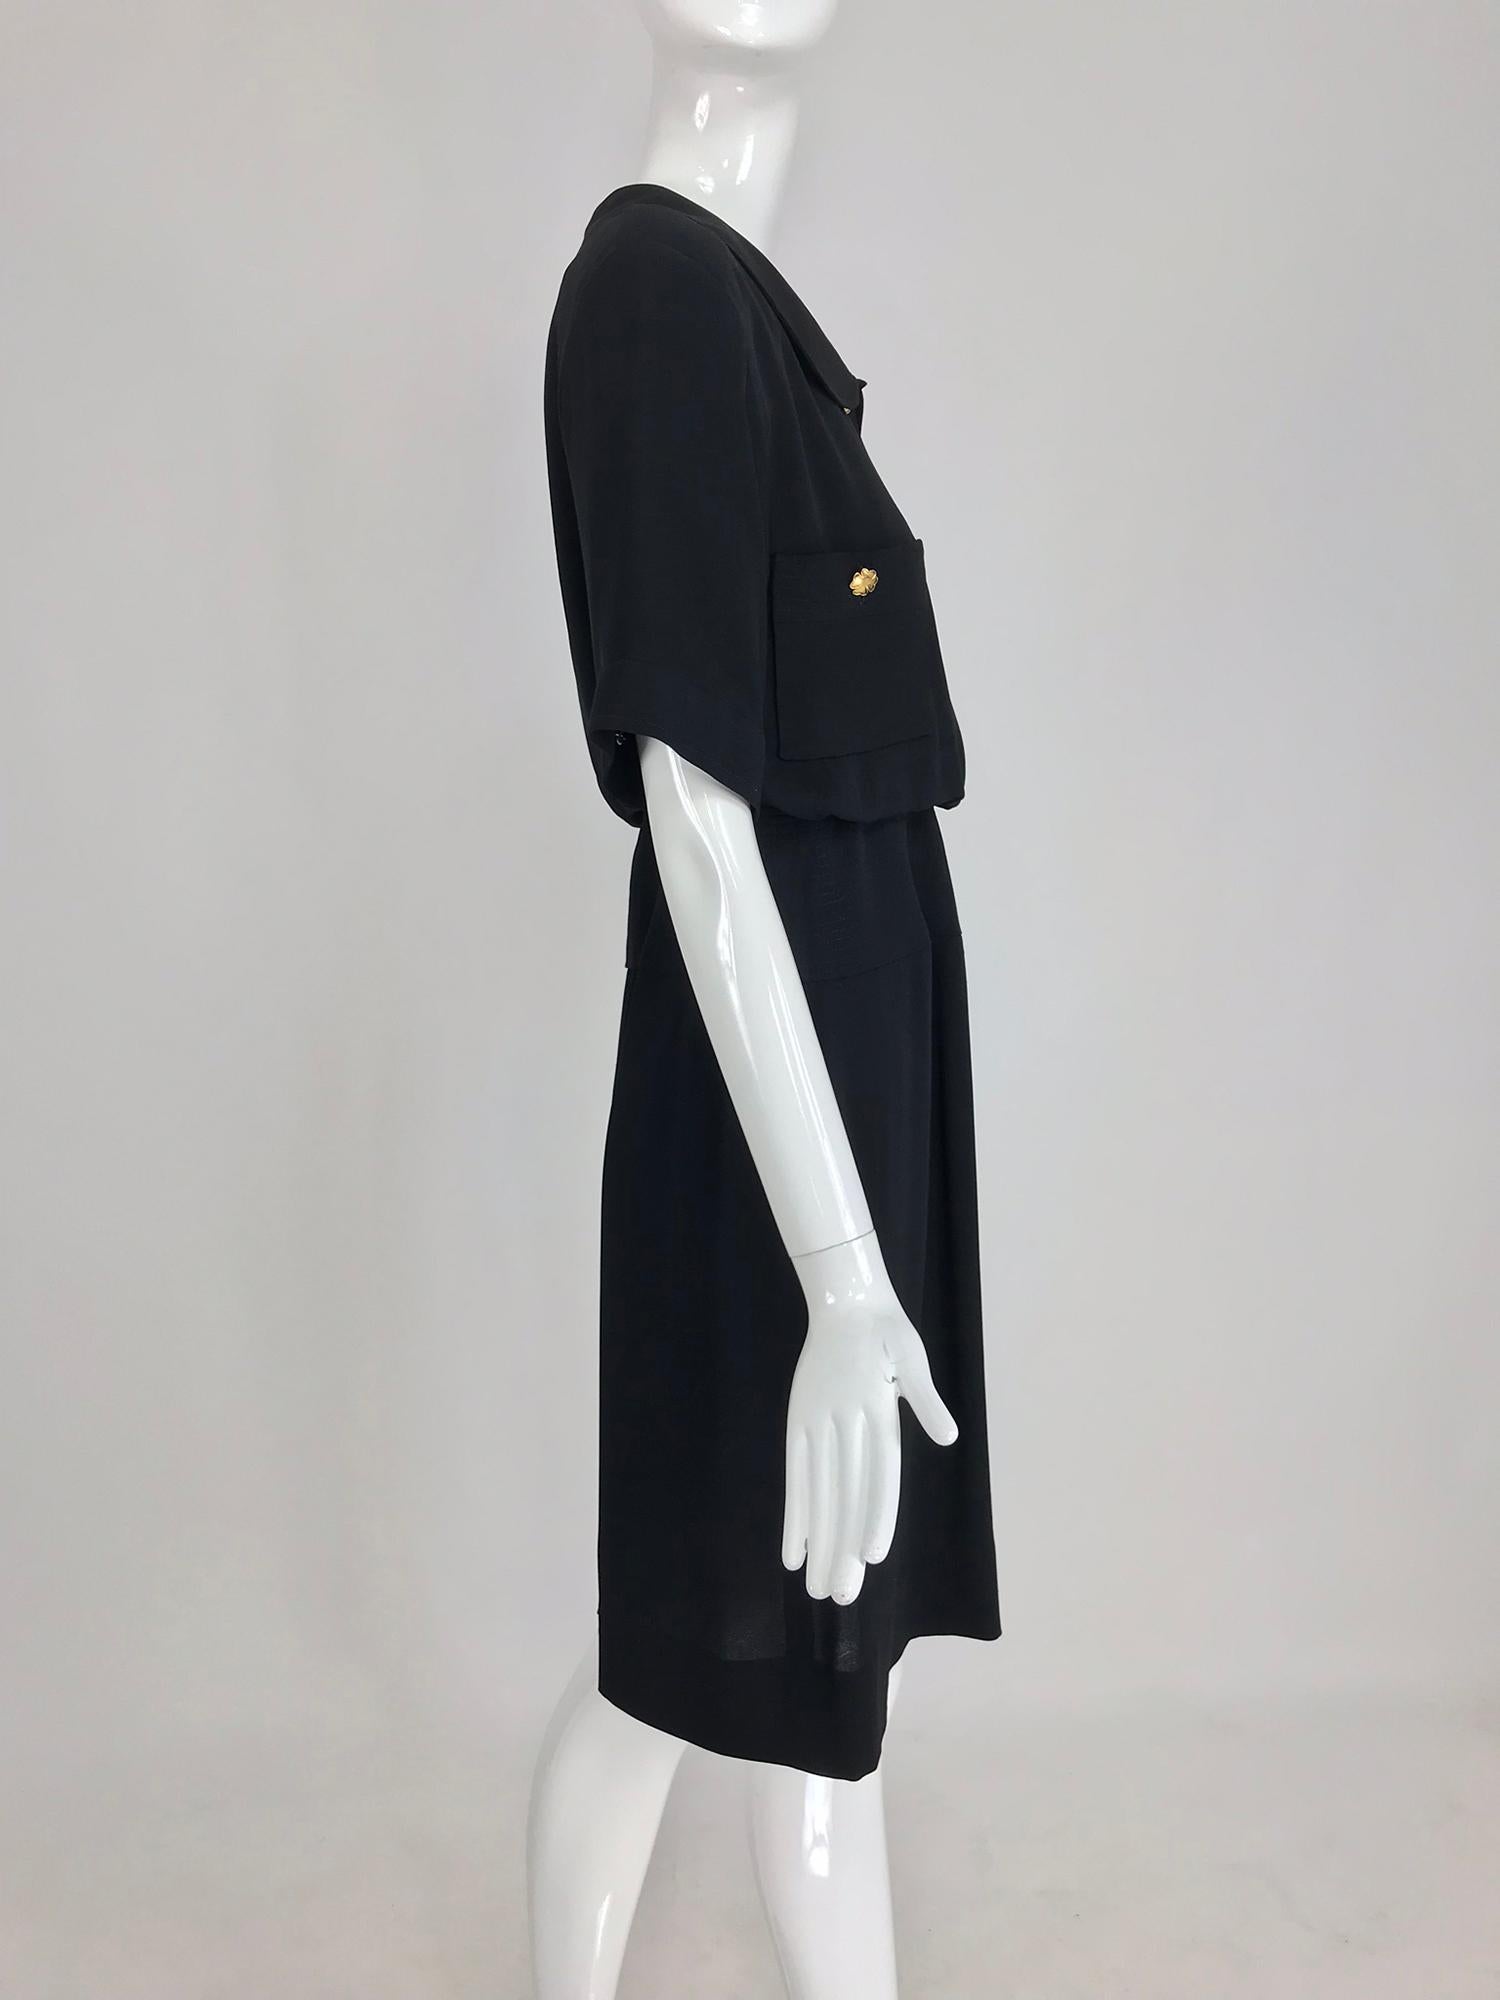 Women's Chanel vintage black crepe shirtwaist day dress